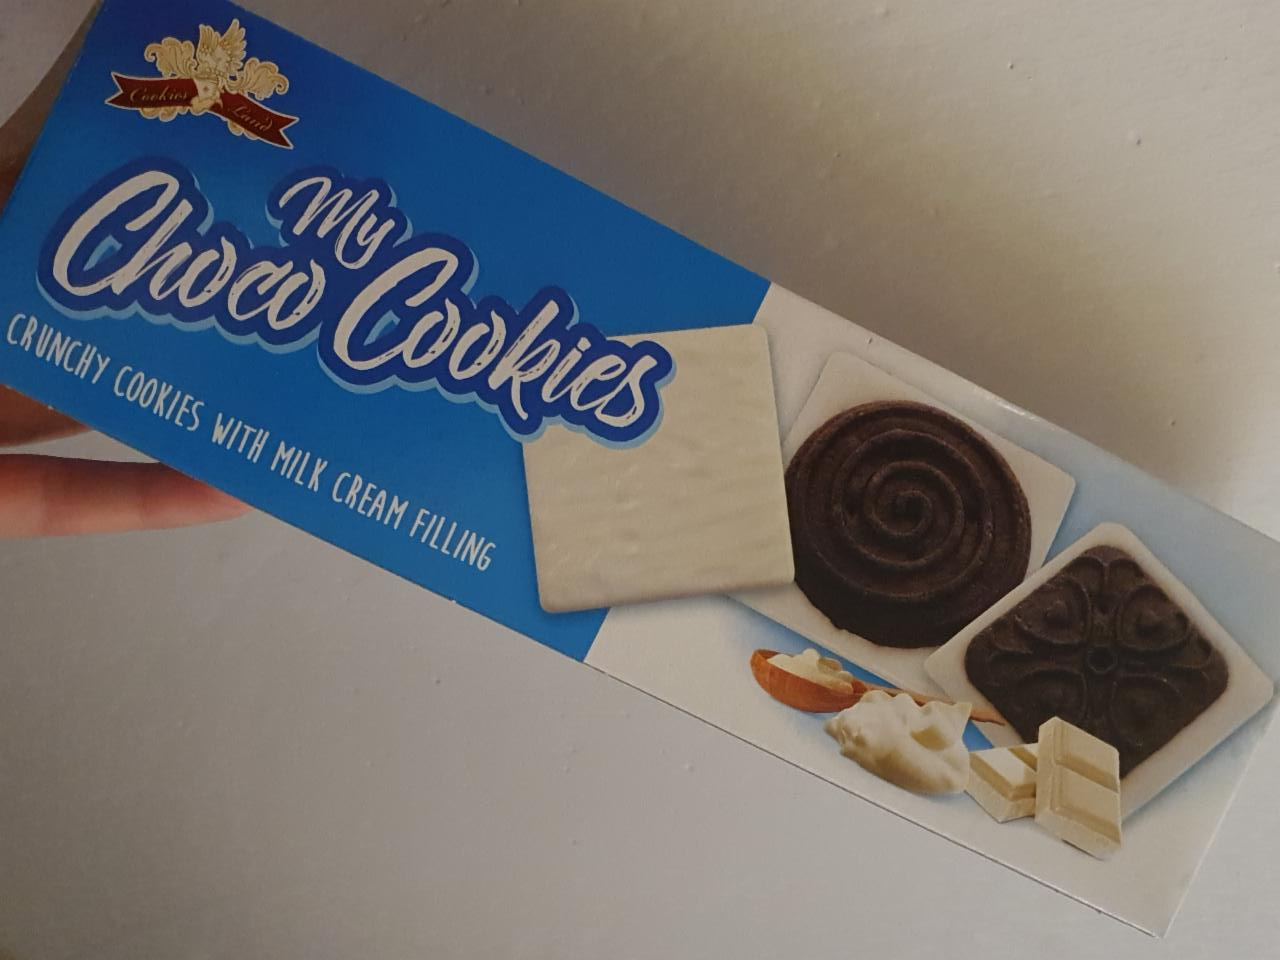 Fotografie - My choco cookies (cocoa cookies with milk cream filling)